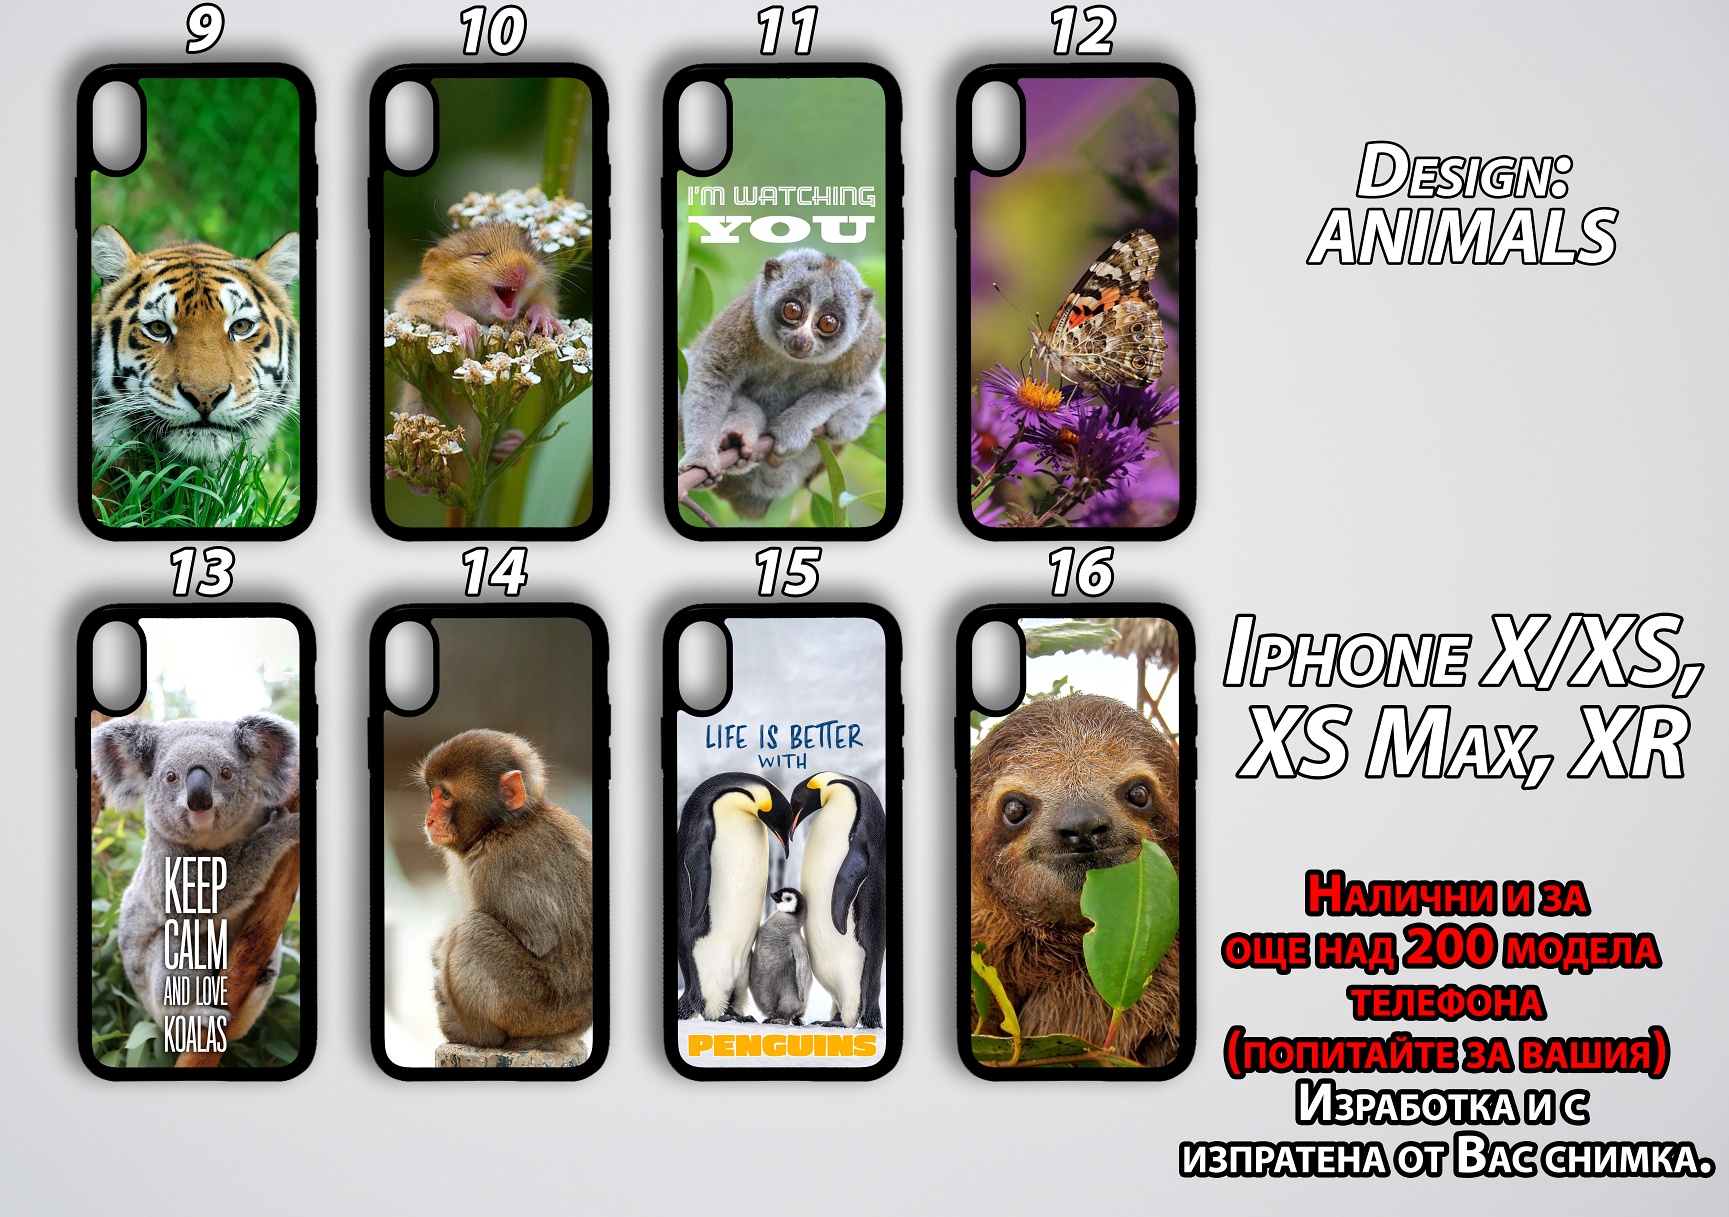 mobile phone cases NEW-Animals 9